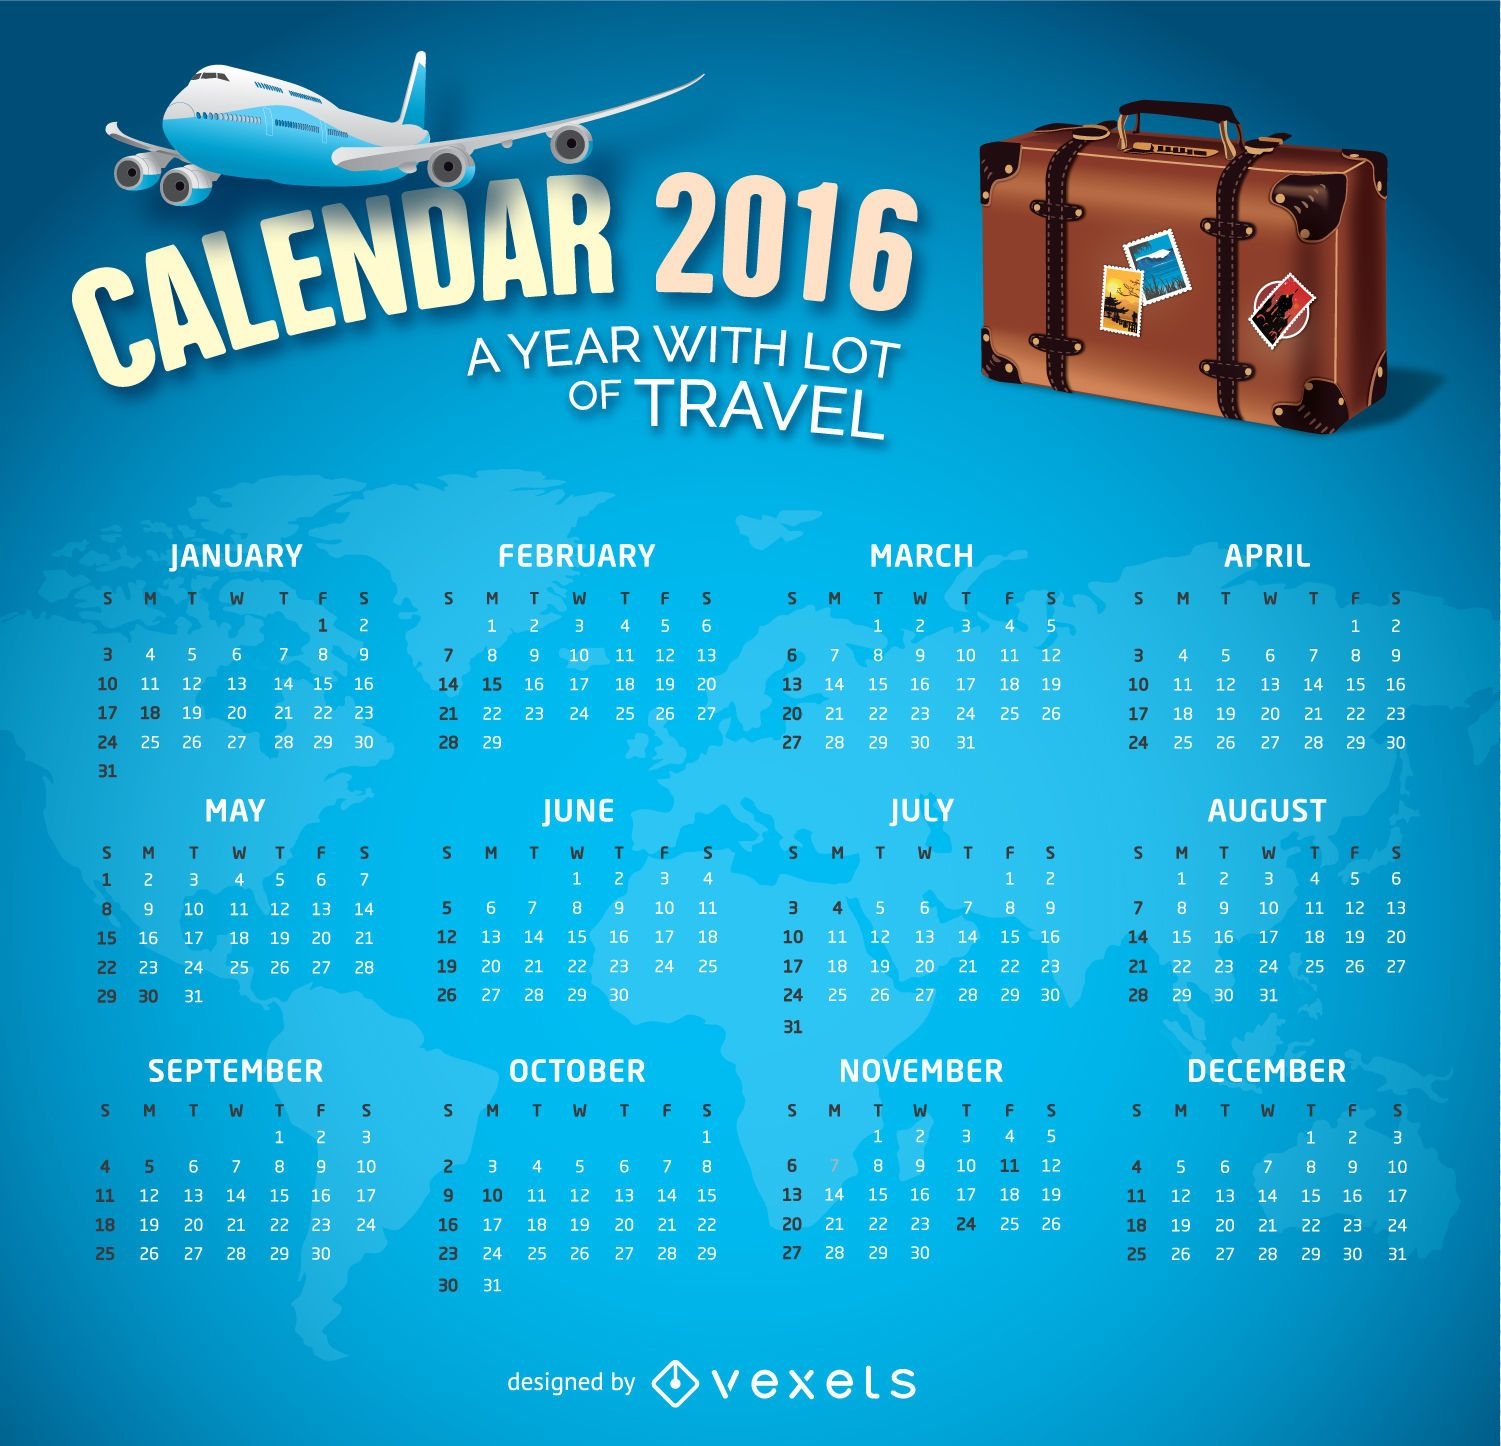 2016 Calendar Travel theme